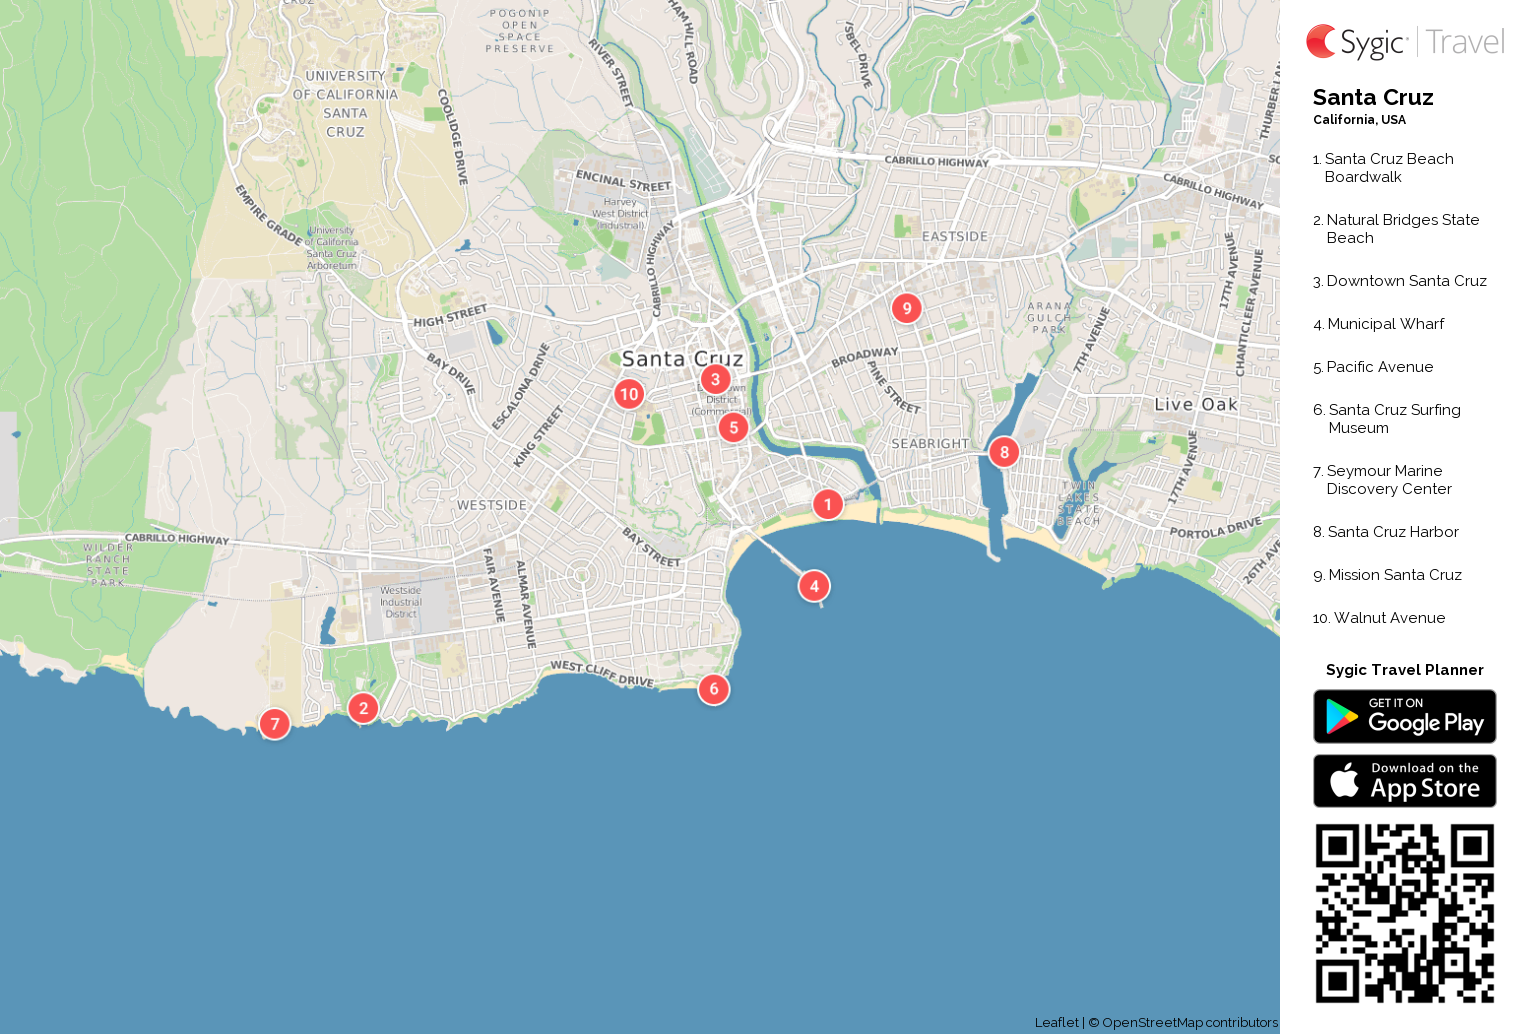 santa cruz beaches map Santa Cruz Printable Tourist Map Sygic Travel santa cruz beaches map